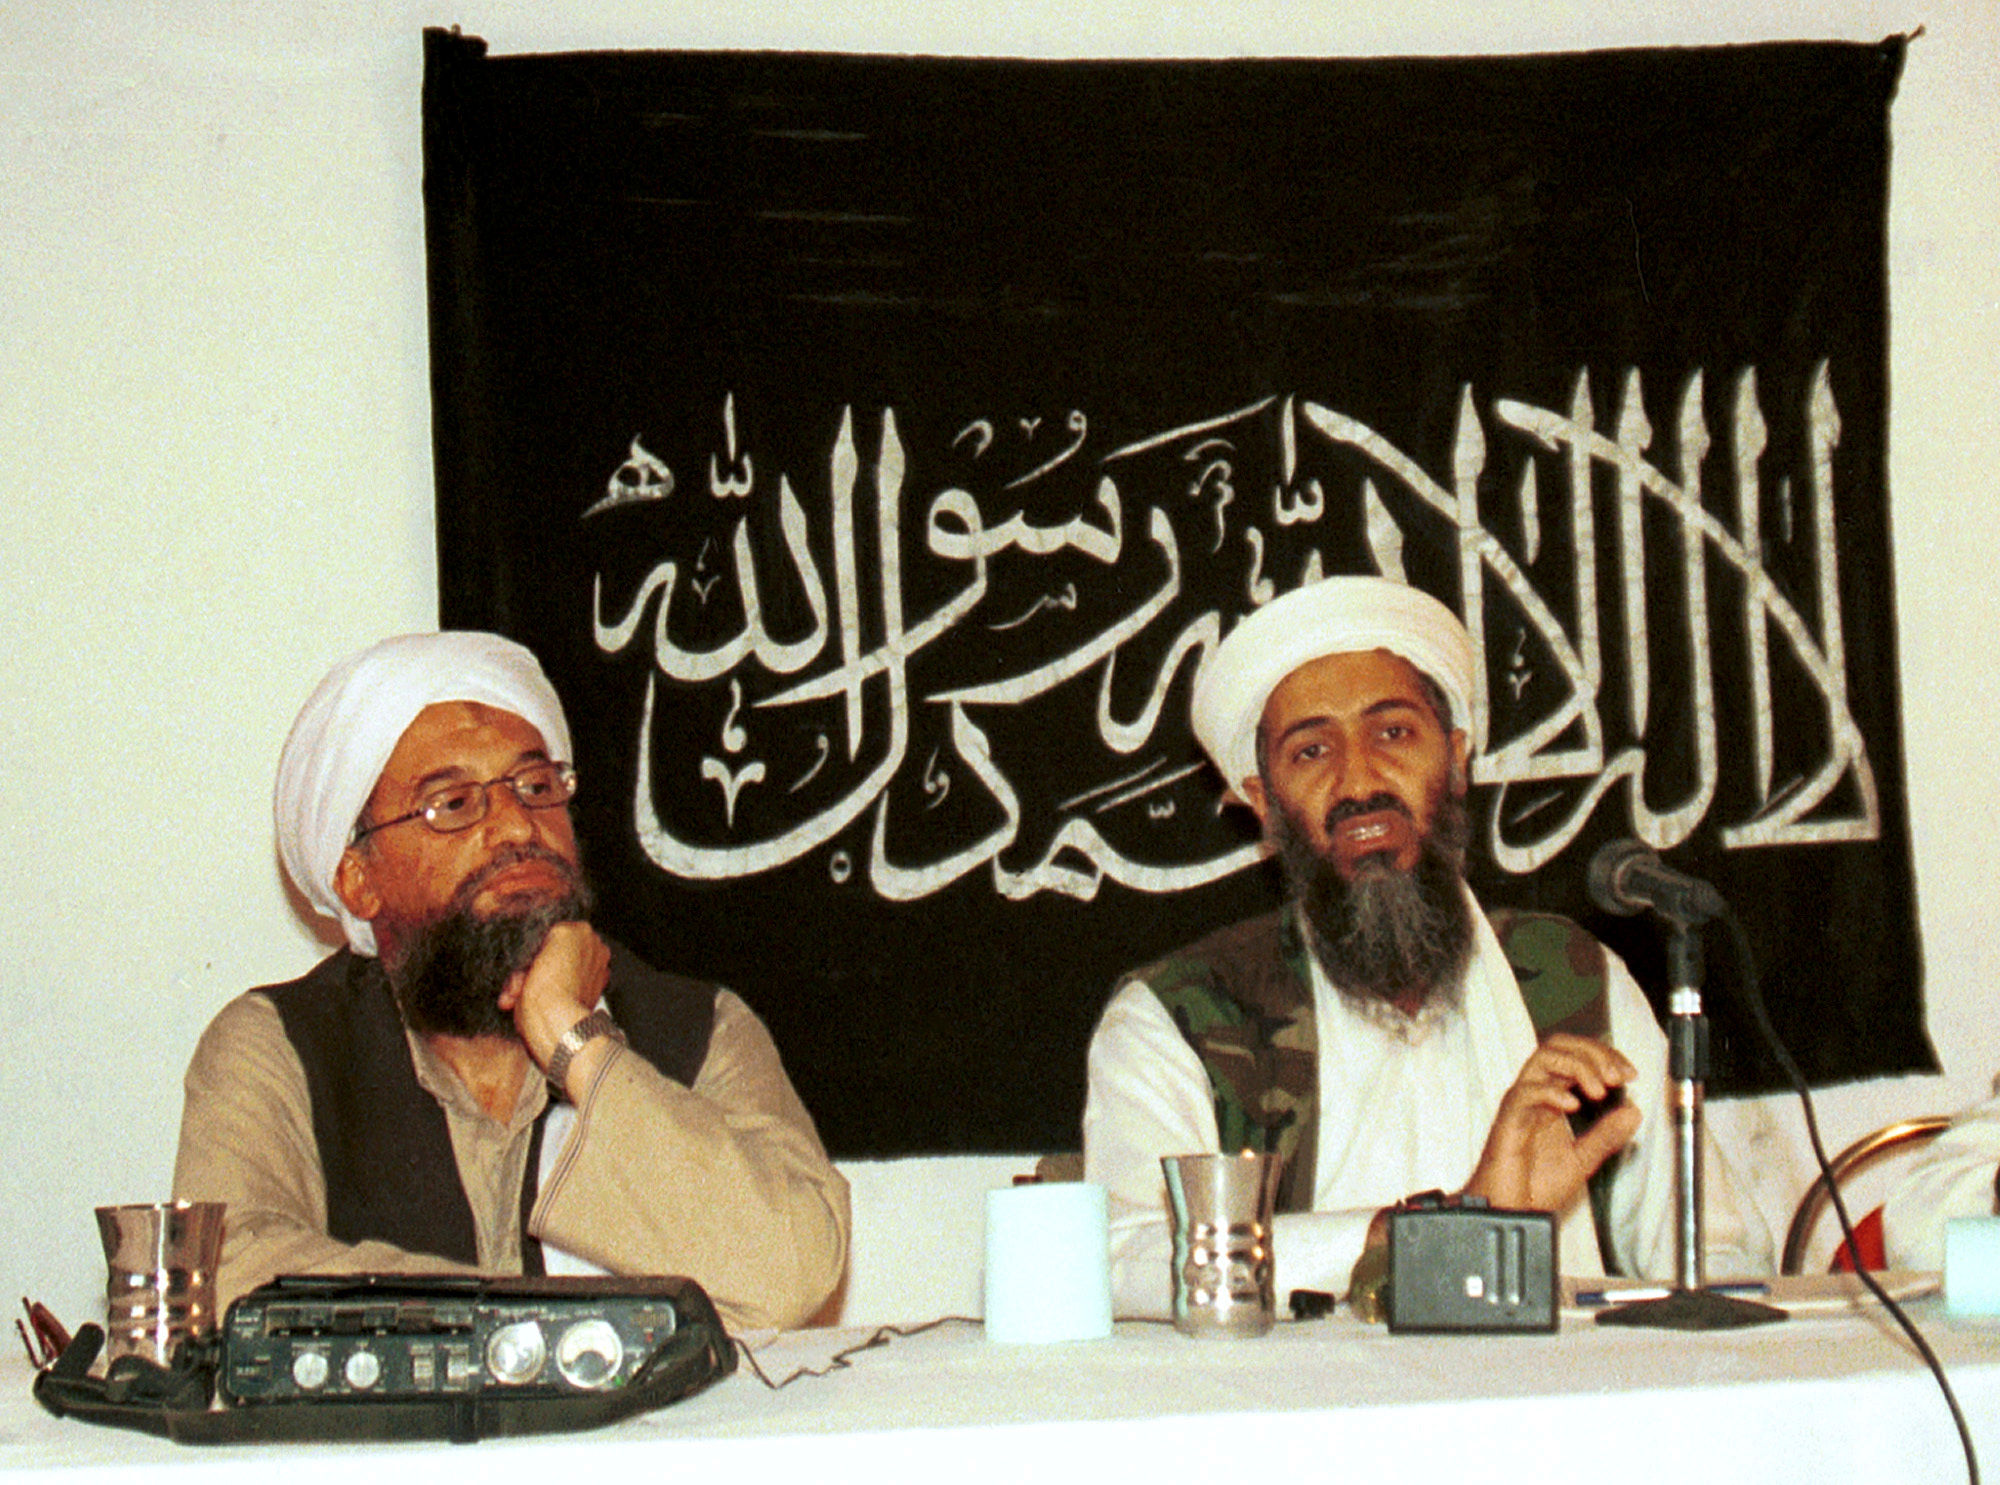 Who are Shafiq and Bakr bin Laden?